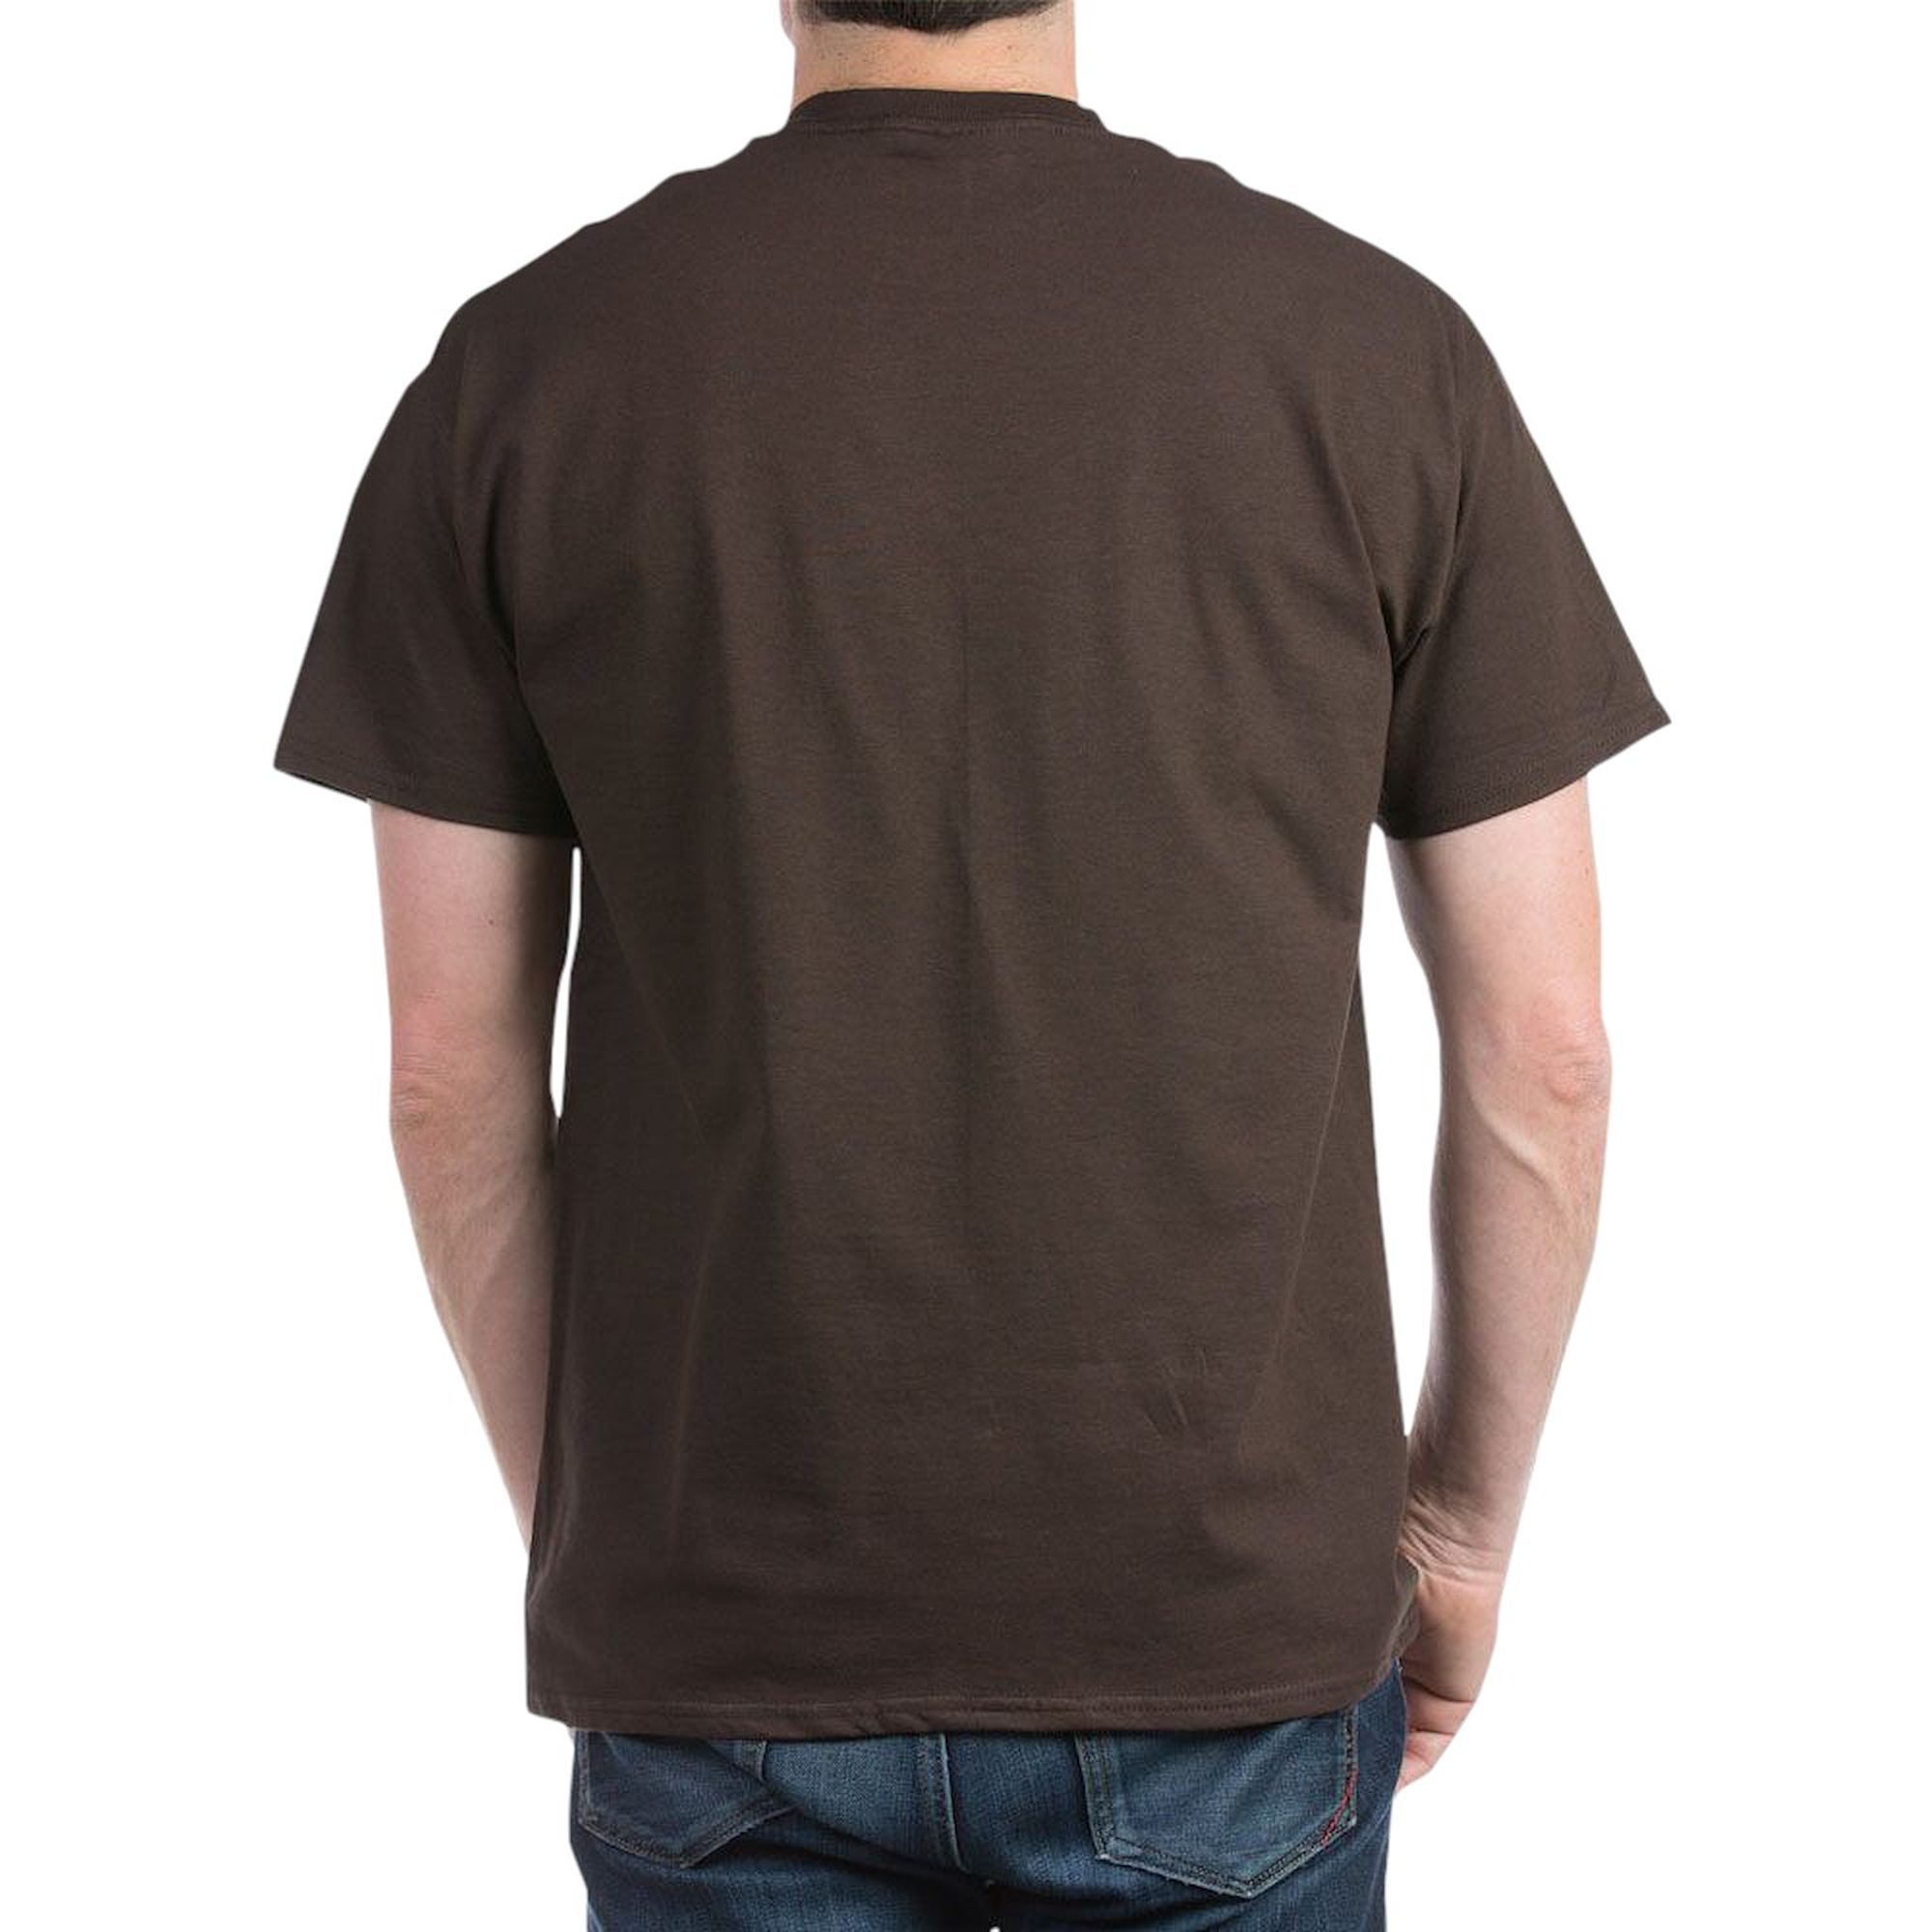 CafePress - Went Outside Graphics Weren't Great Dark T Shirt - 100% Cotton T-Shirt - image 2 of 4